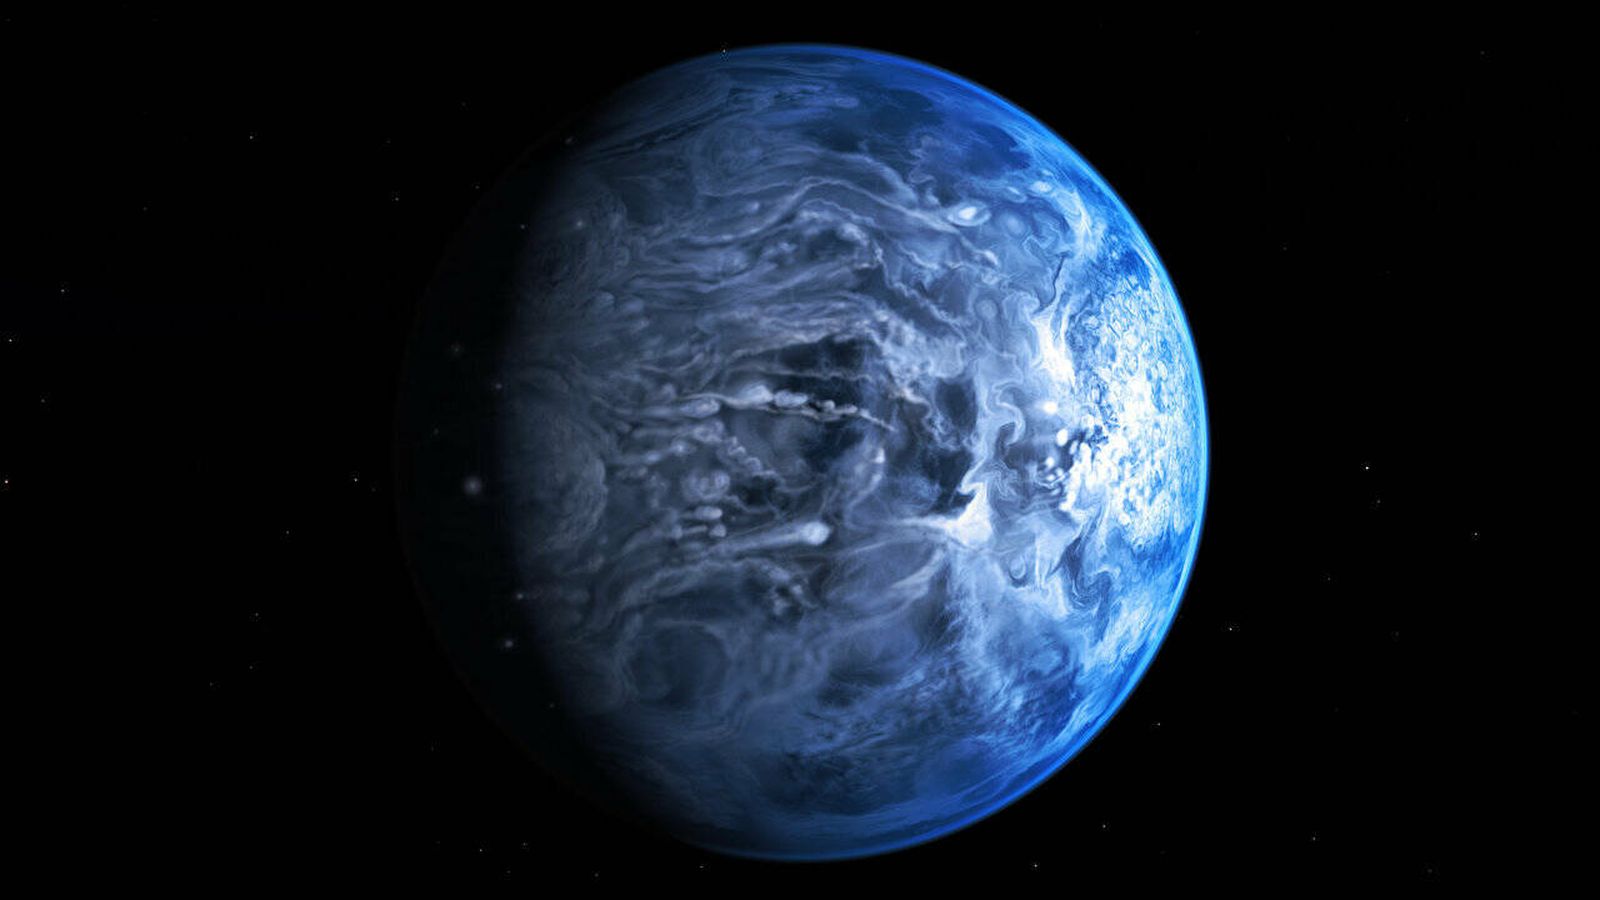 Representación del exoplaneta HD 189733 b, descubierto en 2005. (NASA)